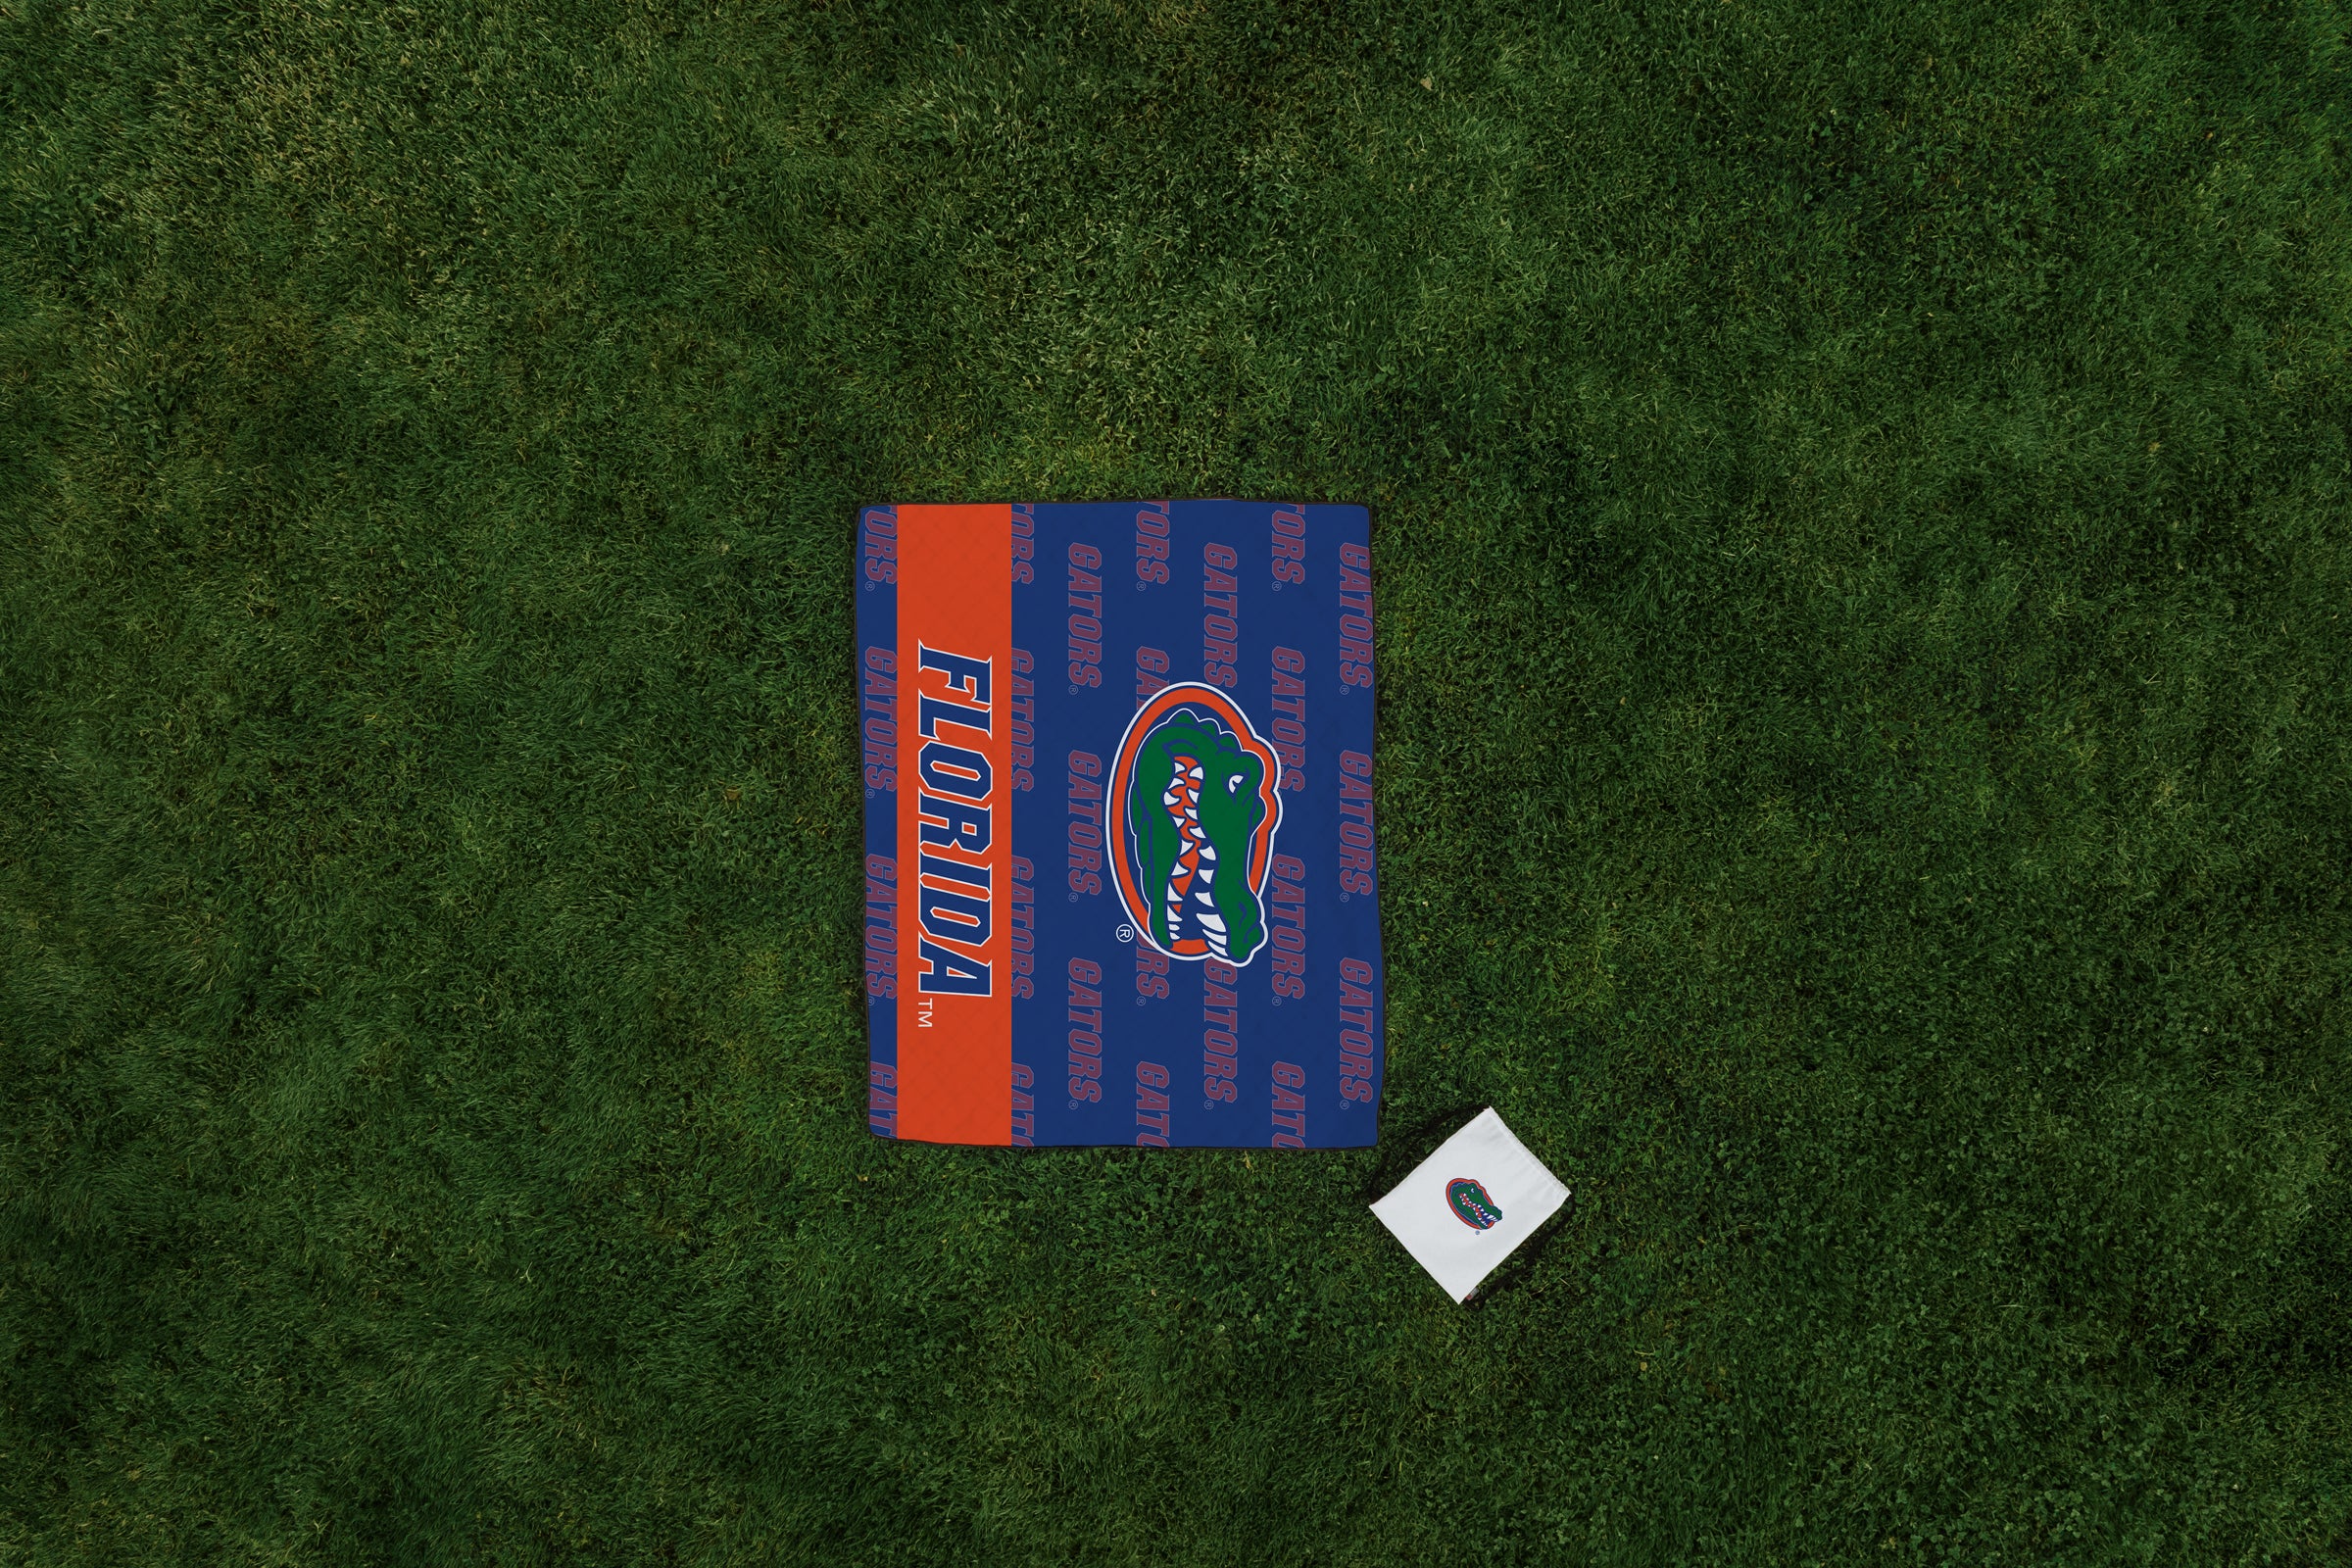 Florida Gators - Impresa Picnic Blanket